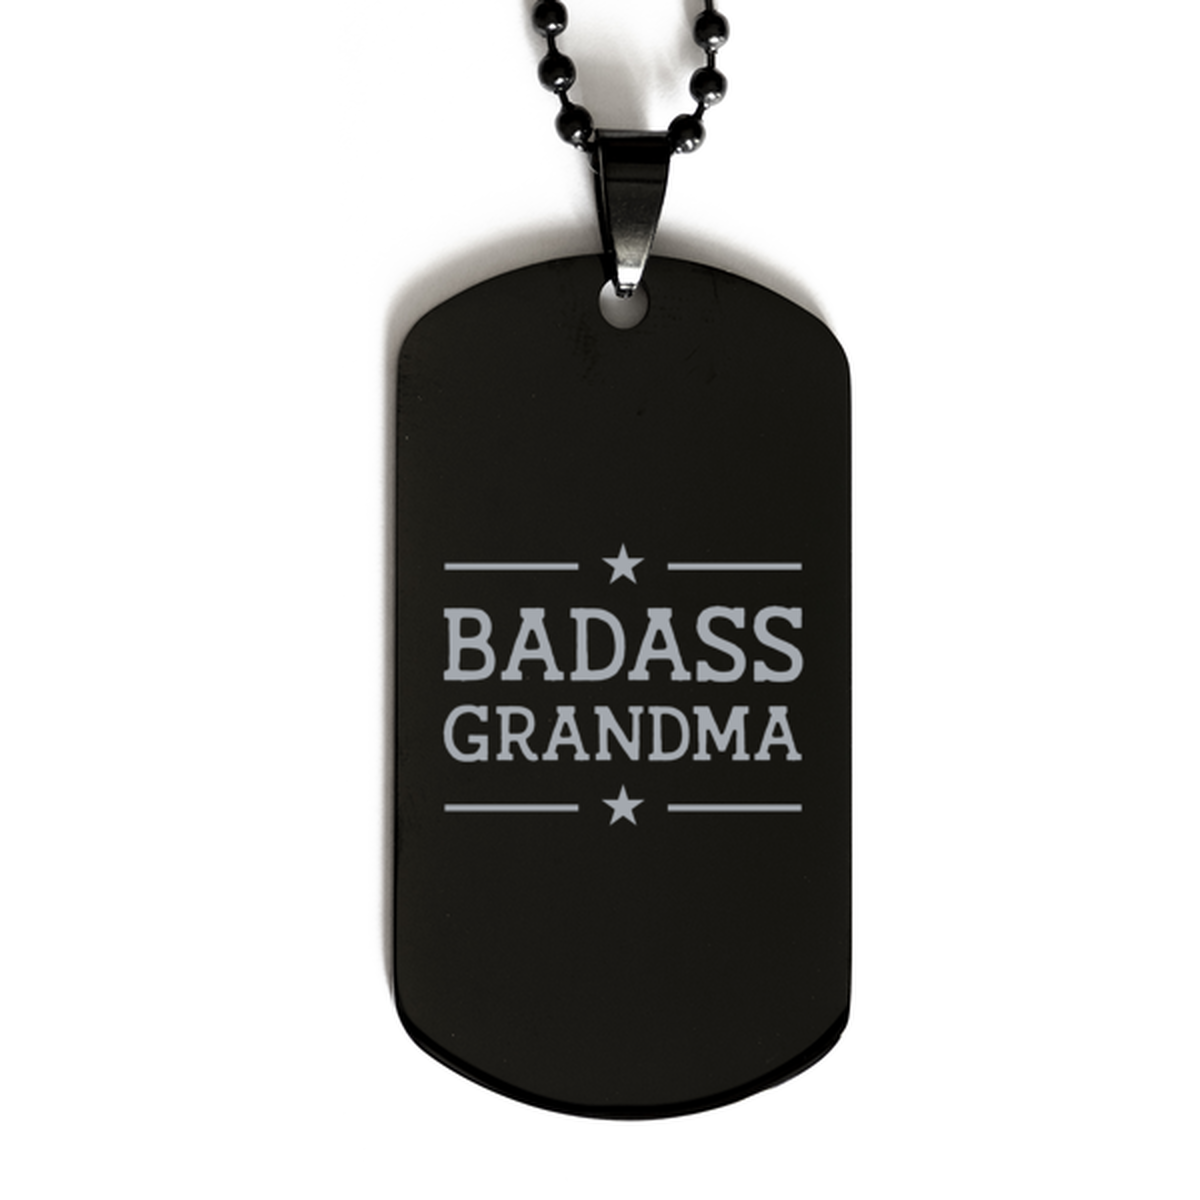 Grandma Black Dog Tag, Badass Grandma, Funny Family Gifts  Necklace For Grandma From Granddaughter Grandson